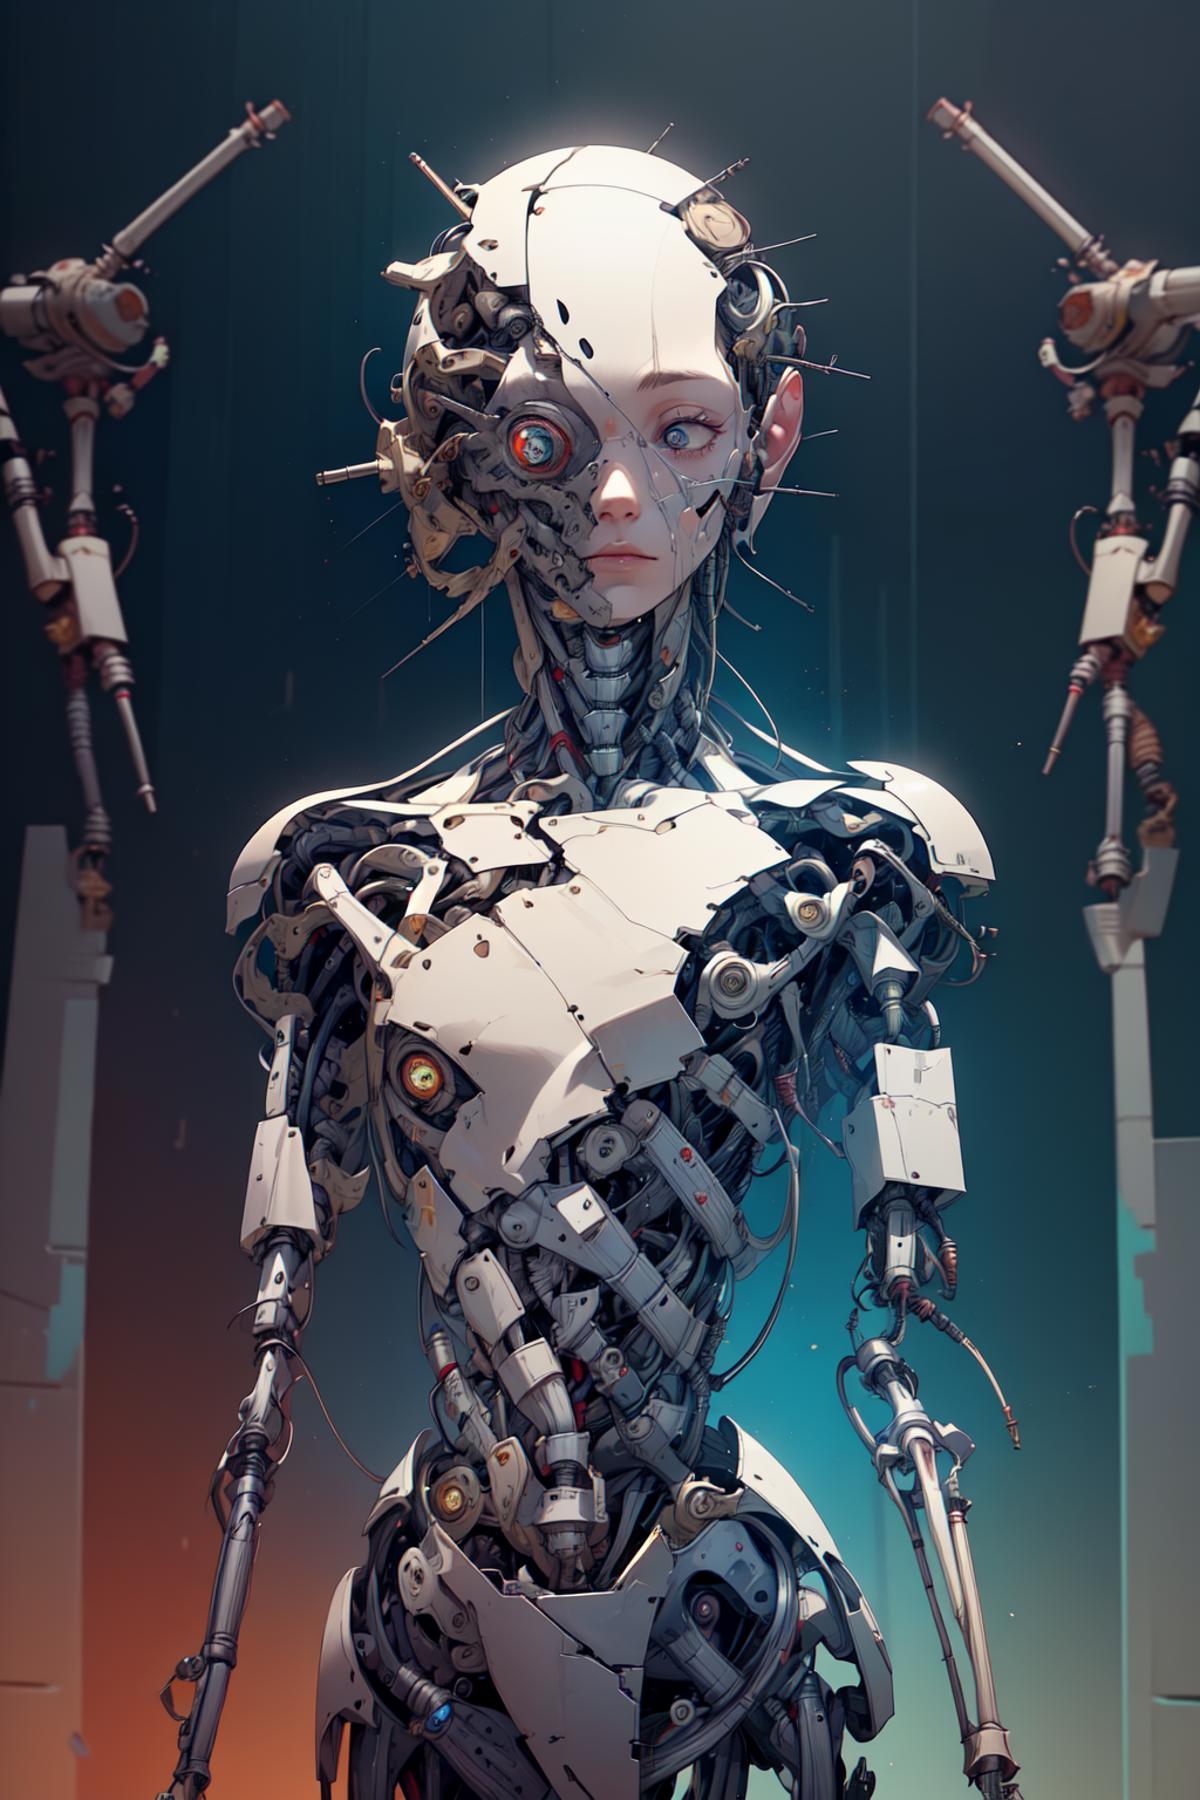 [LuisaP] 🤖 Humanoid Robots [1MB] image by bankenichi